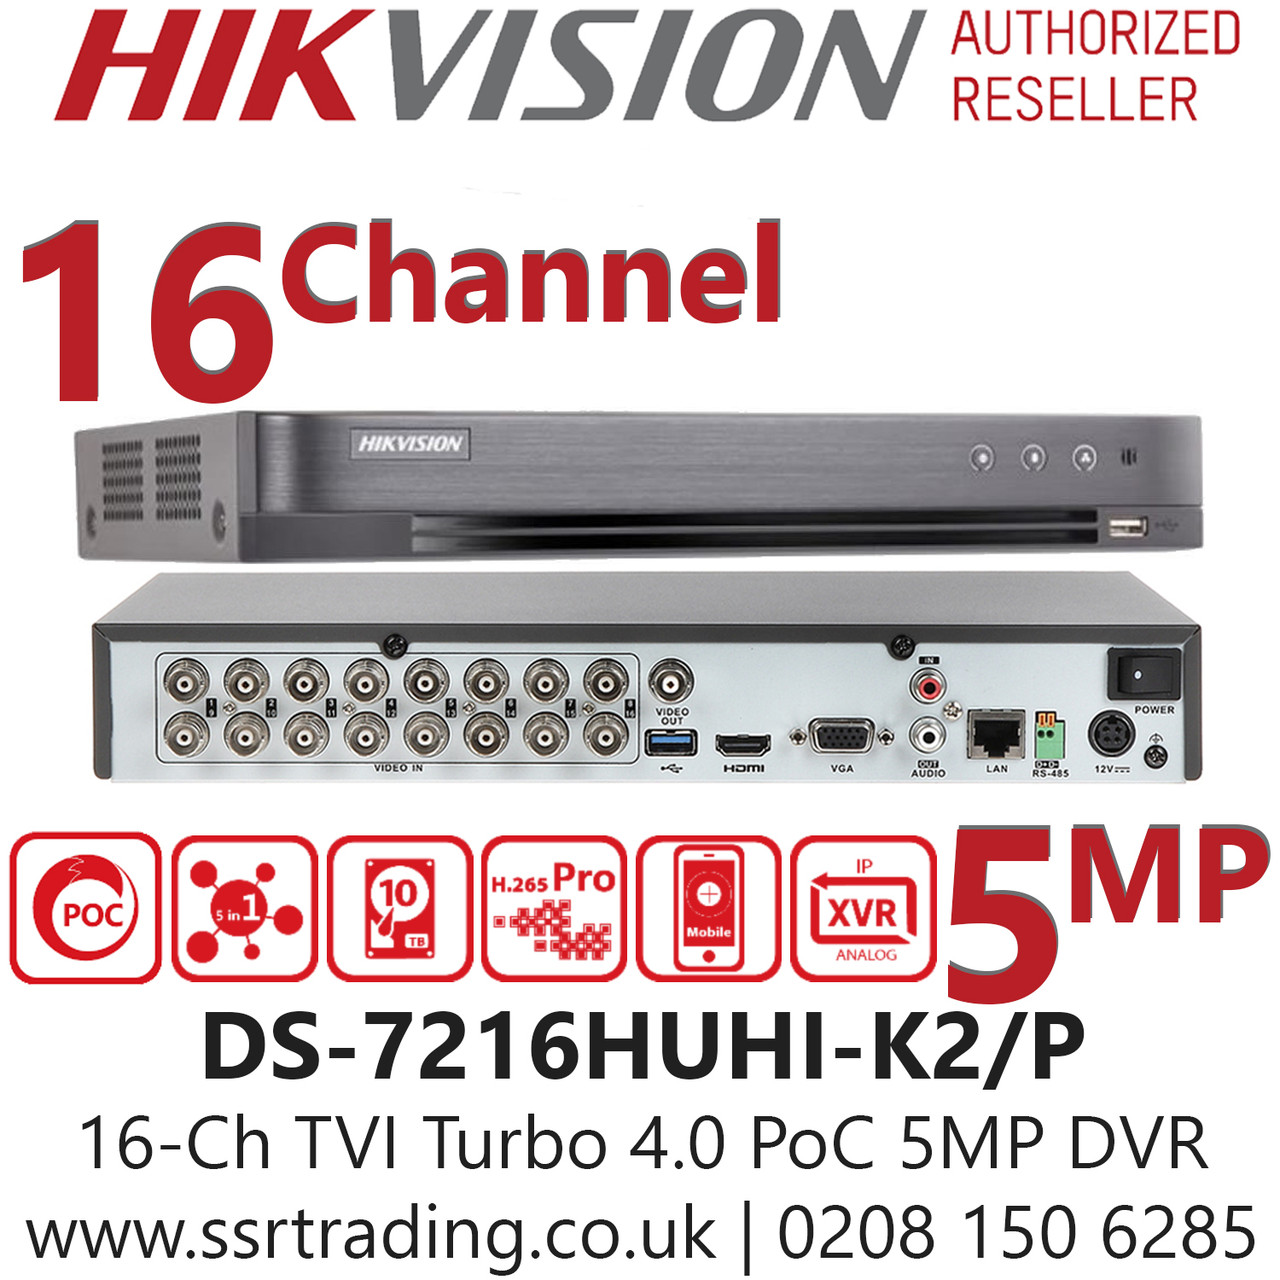 HIKVISION DS-7216HUHI-K2/P 16 channel TVI Turbo 4.0 PoC 5MP DVR, 16CH CCTV  Surveillance Recorder with 2 SATA Interface